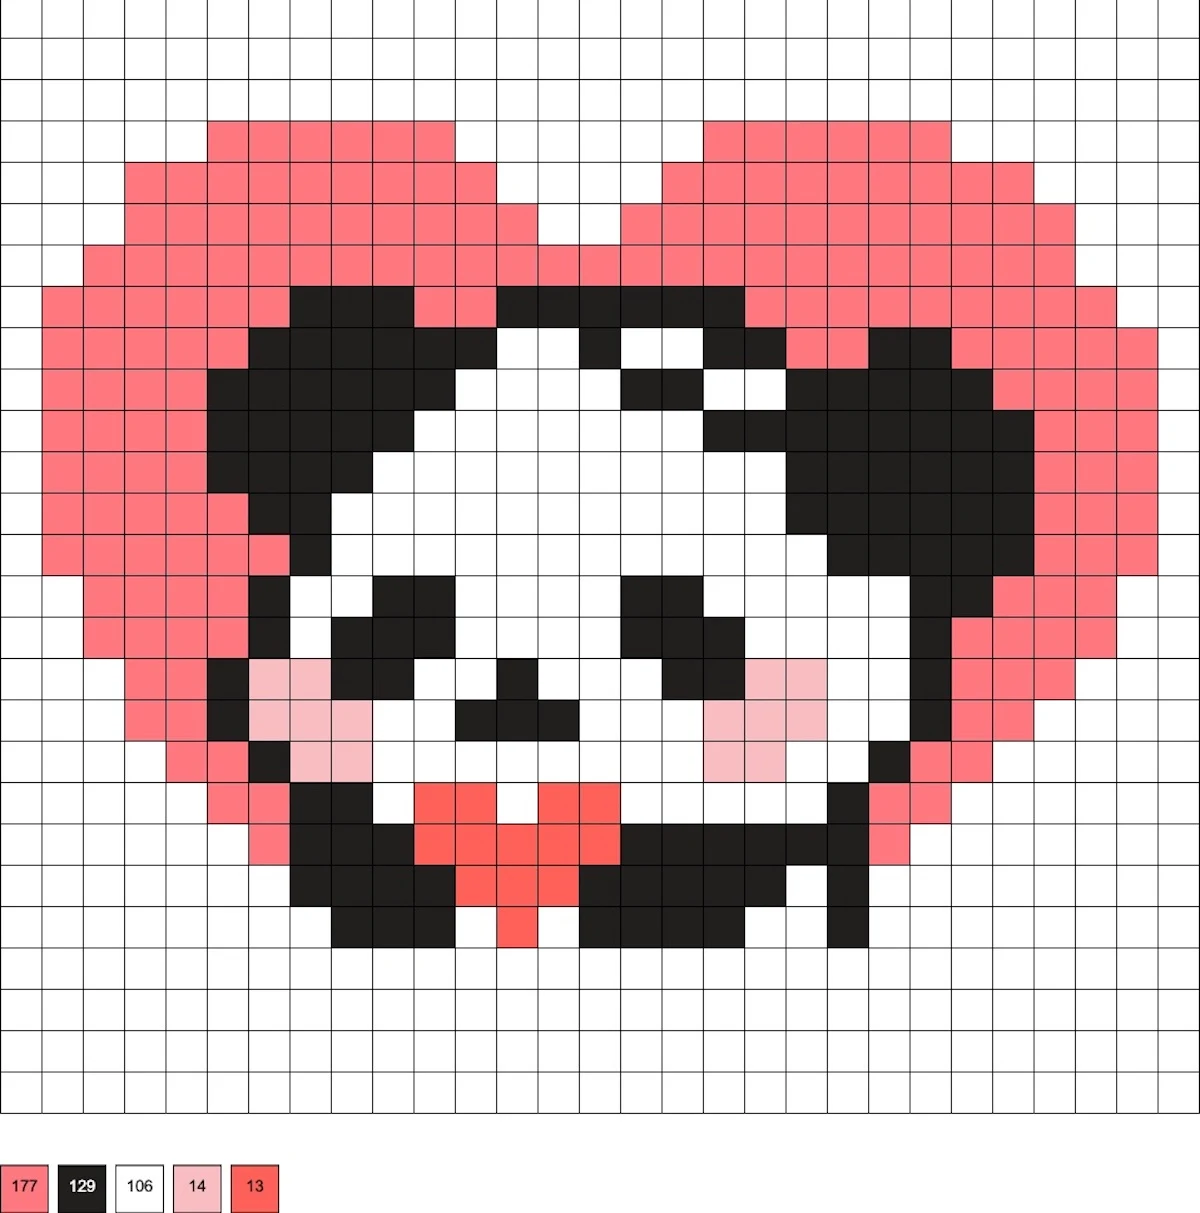 panda in a heart holding a heart